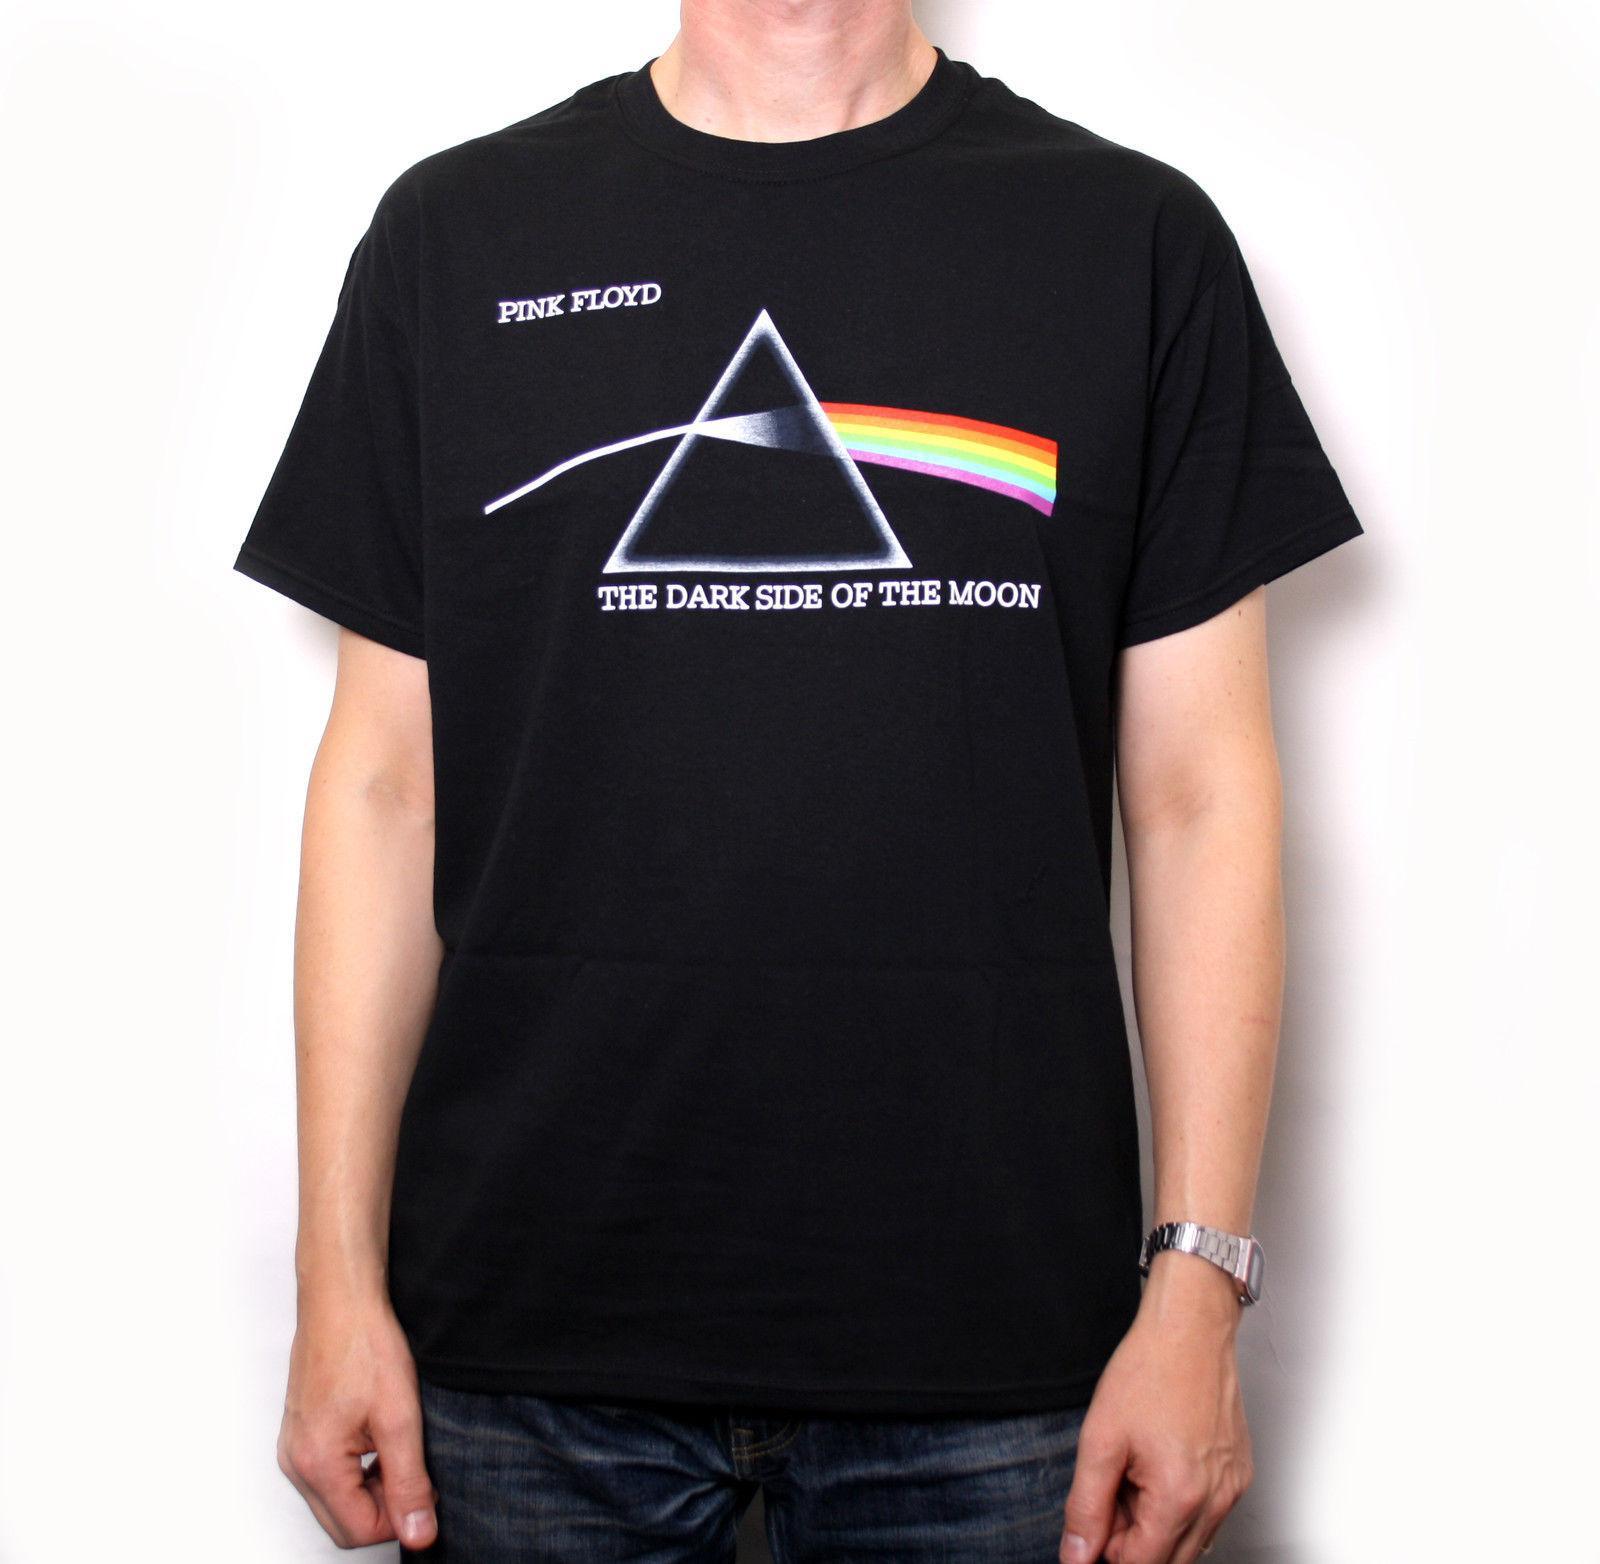 Zu Small Logo - Details Zu Pink Floyd T Shirt Dark Side Of The Moon Small Logo 100 ...